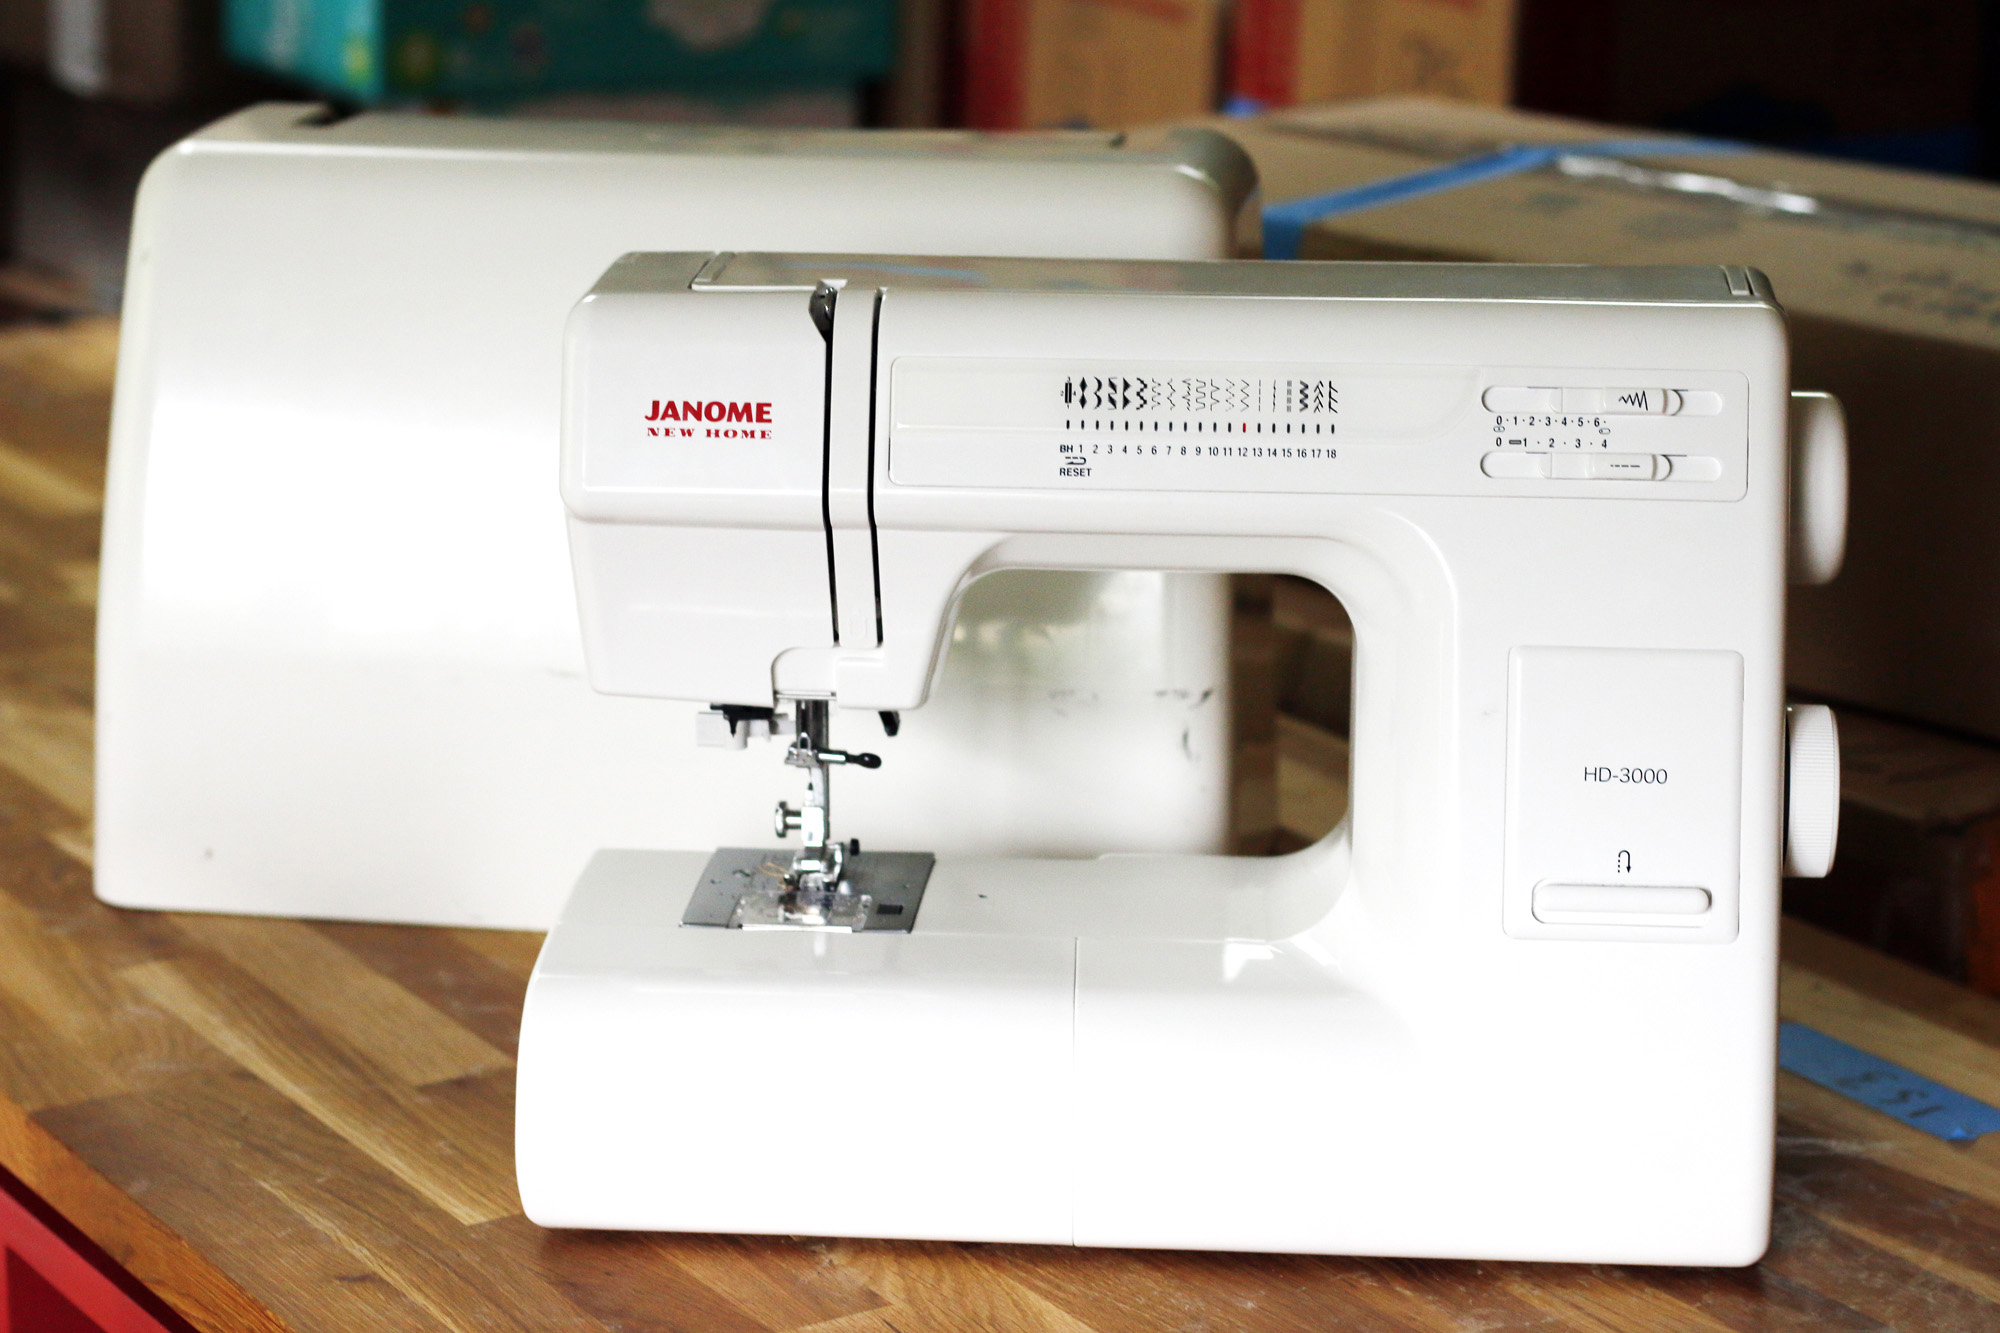 Handheld Sewing Machine vs. Heavy Duty Sewing Machine: Choosing